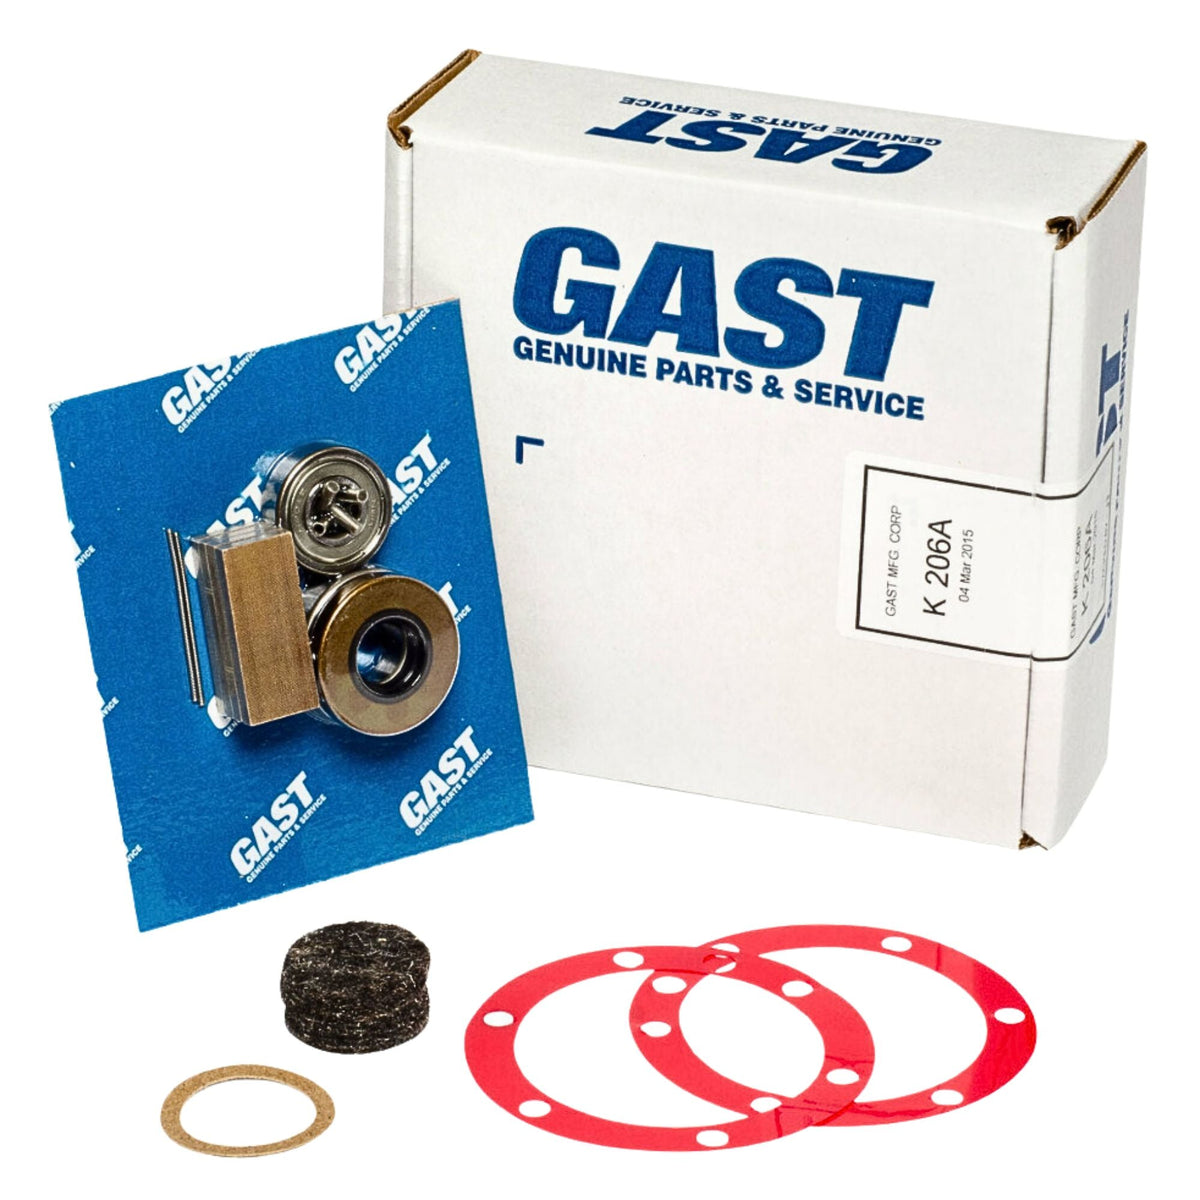 Gast | 4AM Service Kit (4 vane) | K206A used on gast product line